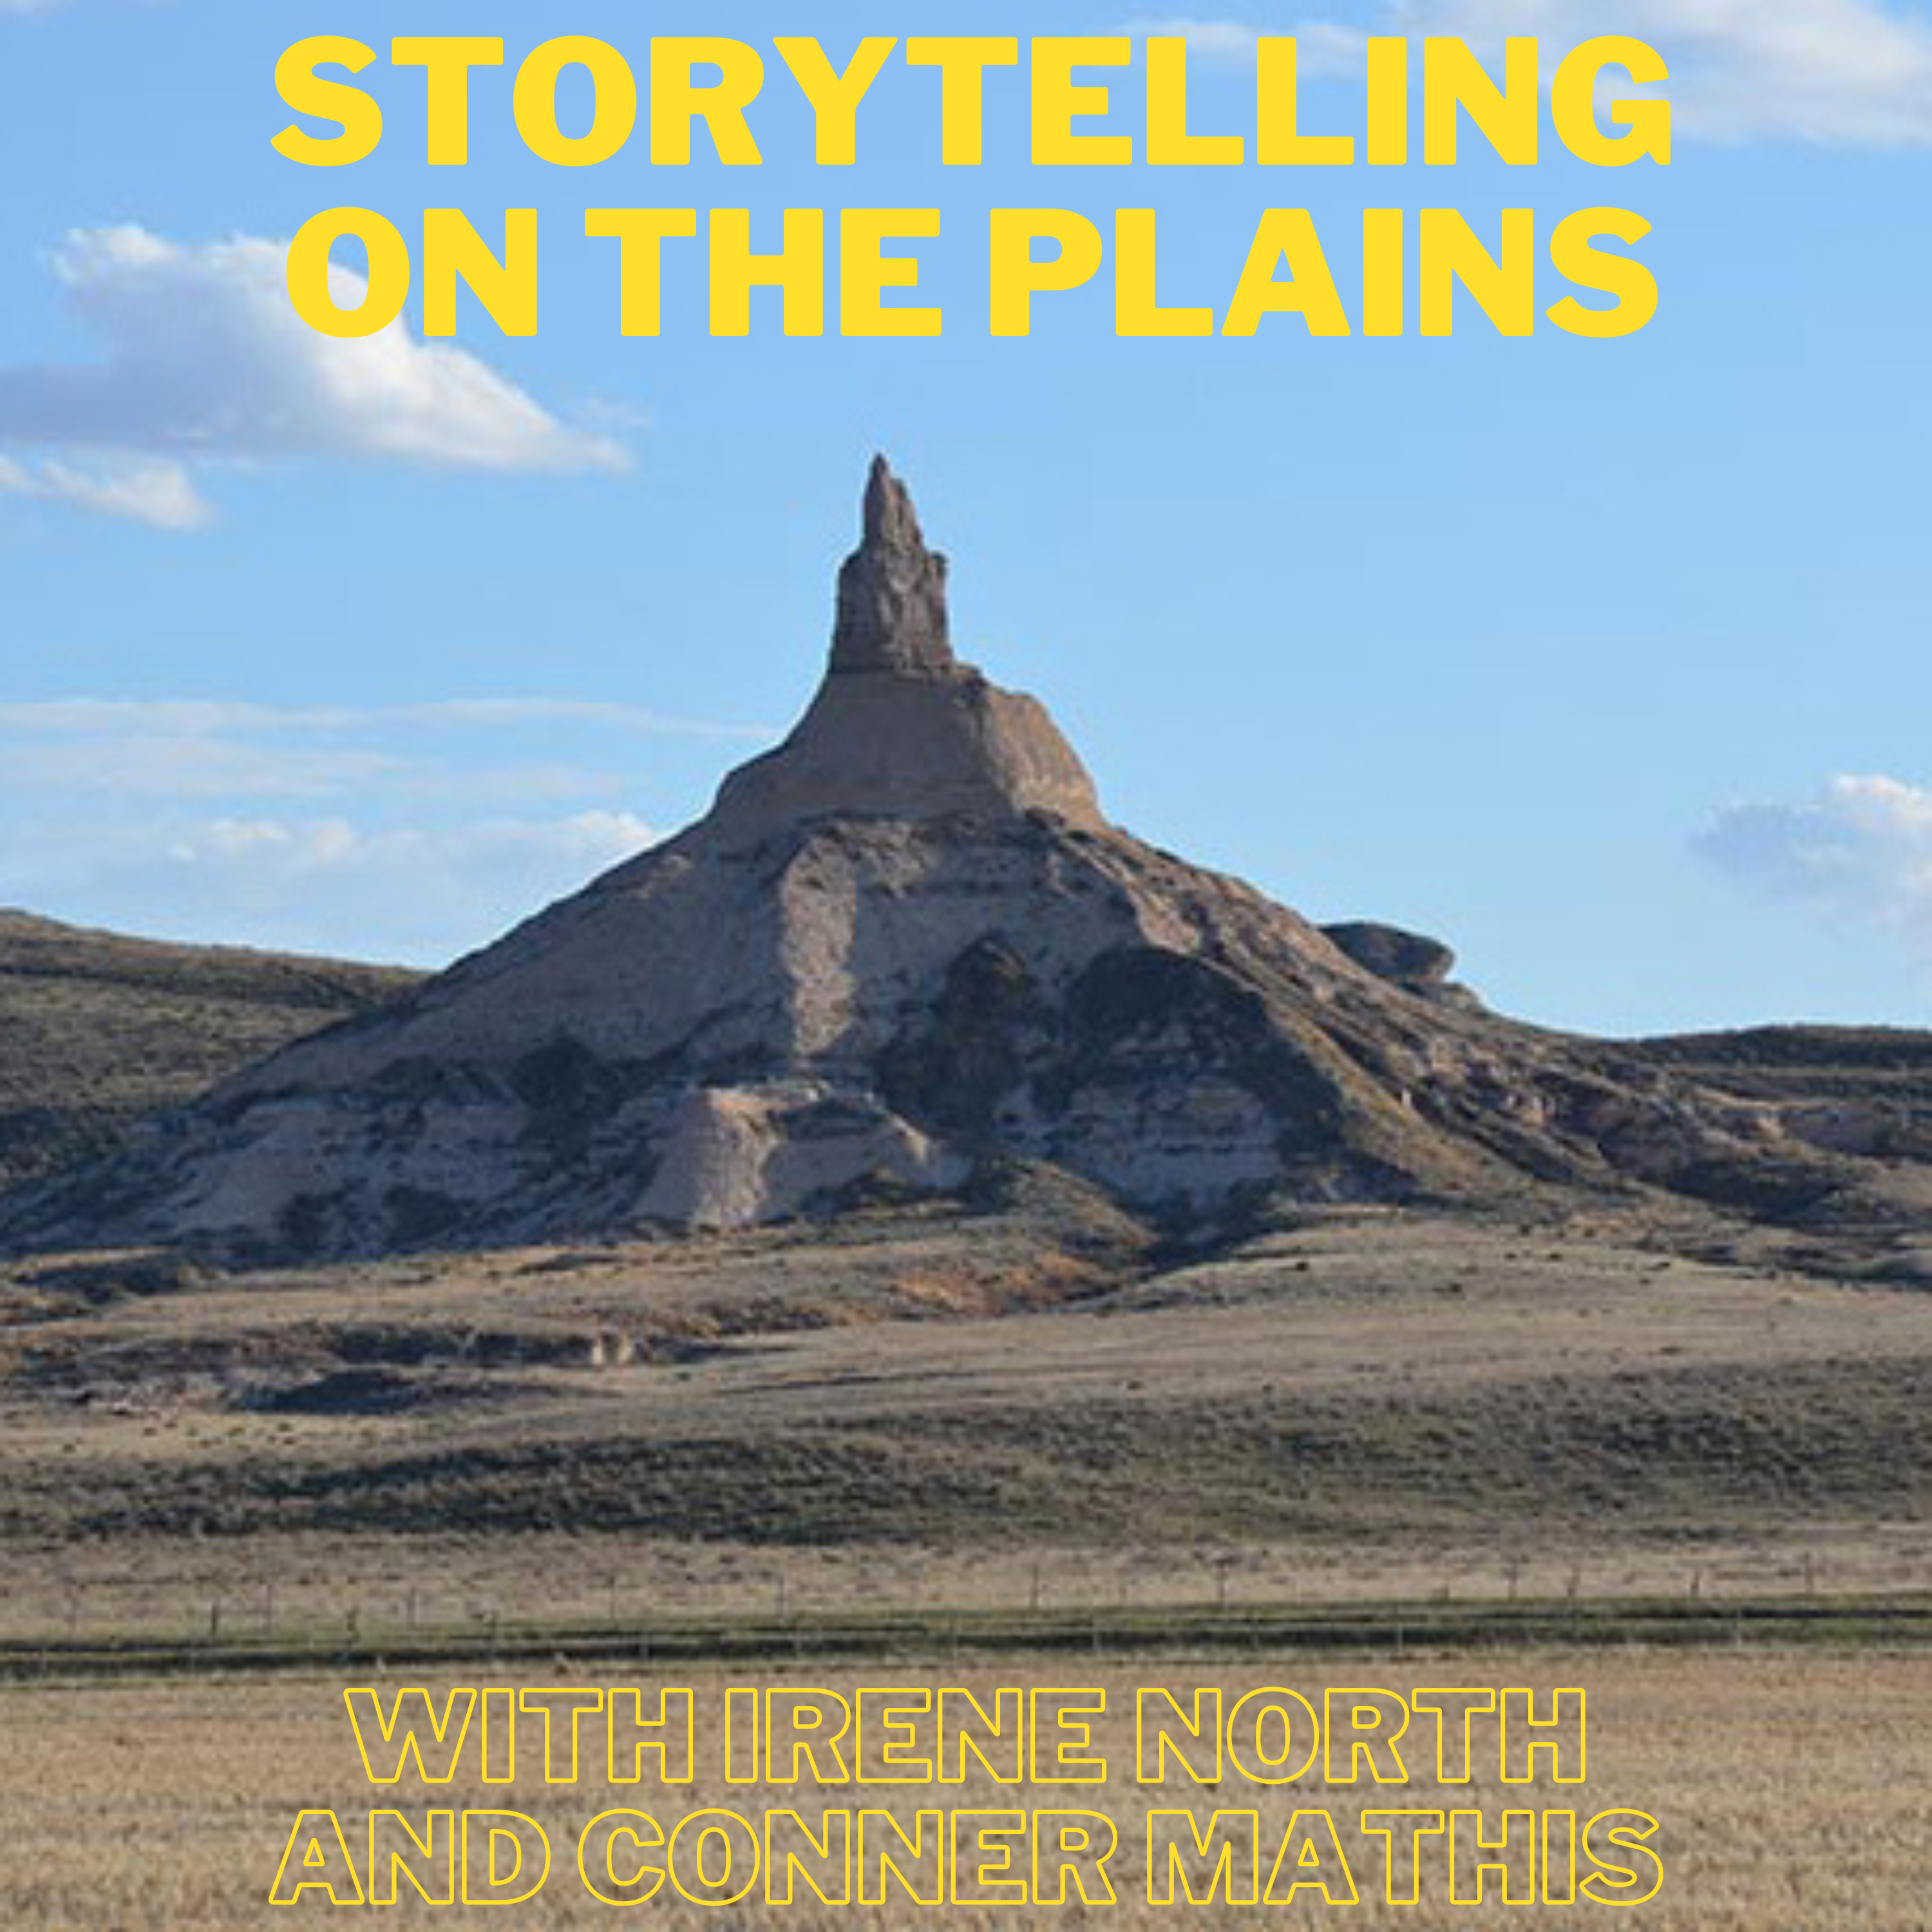 Storytelling on the Plains